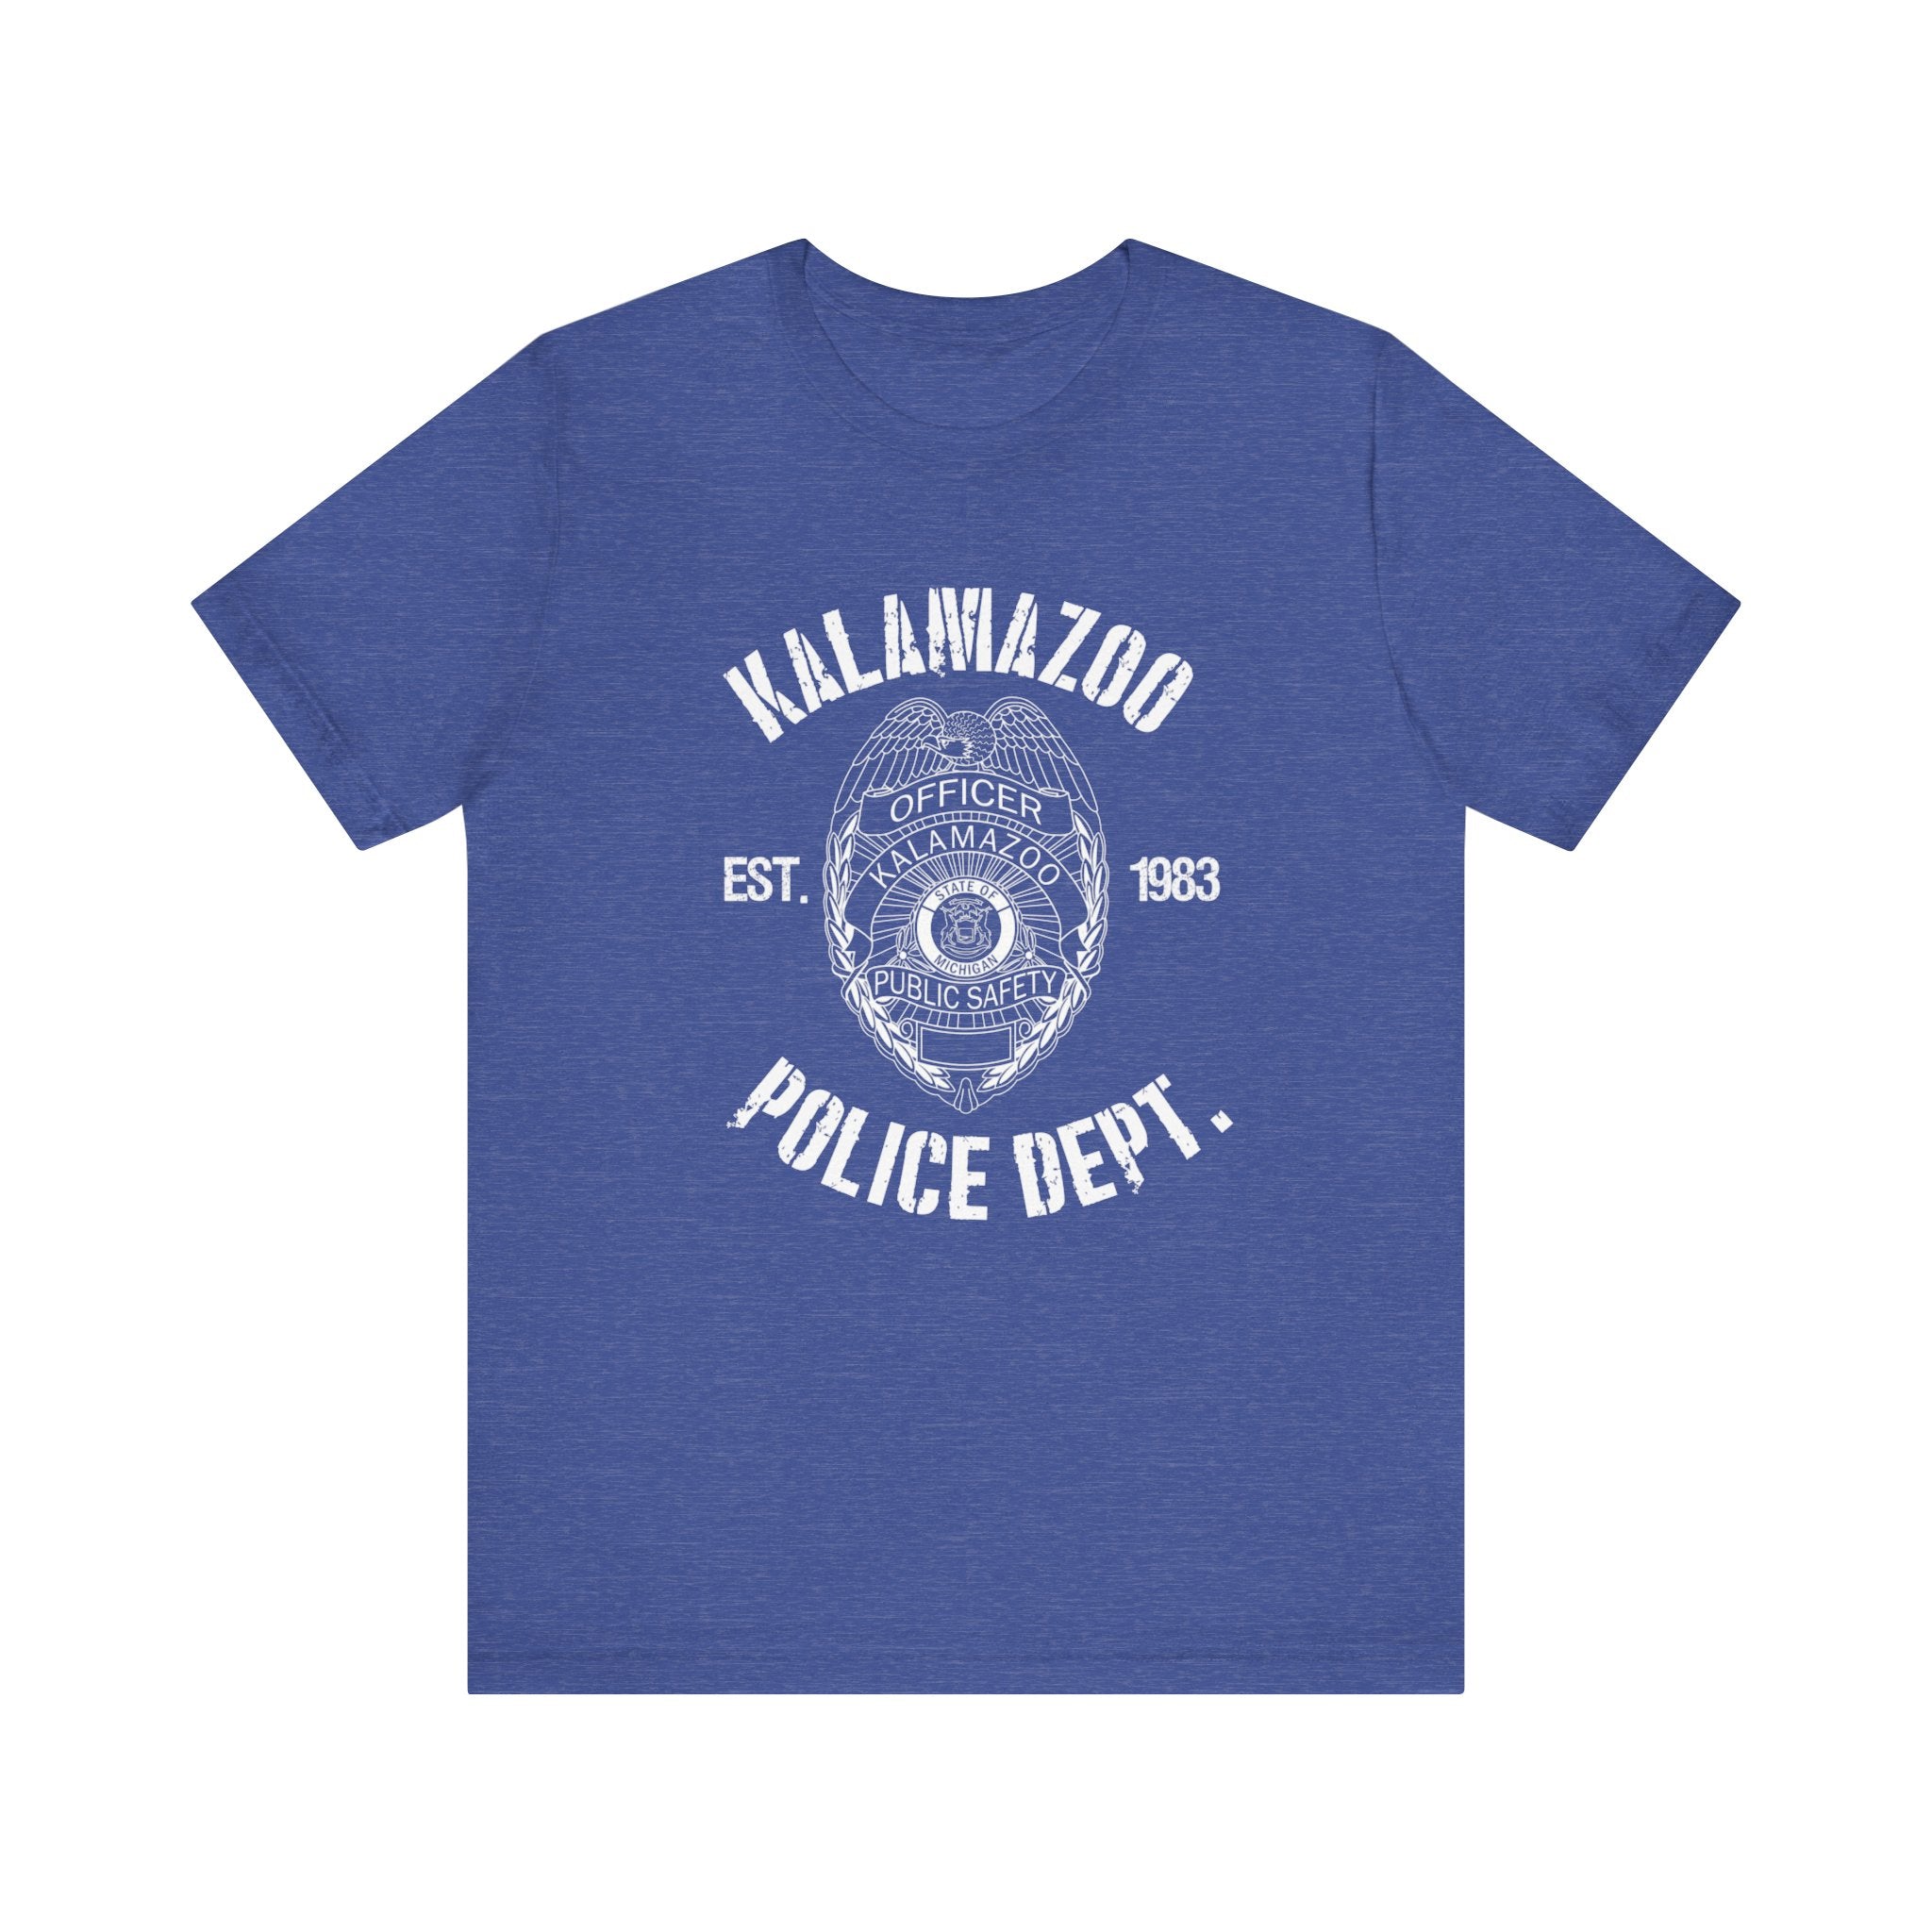 Kalamazoo Police Department Badge Tee